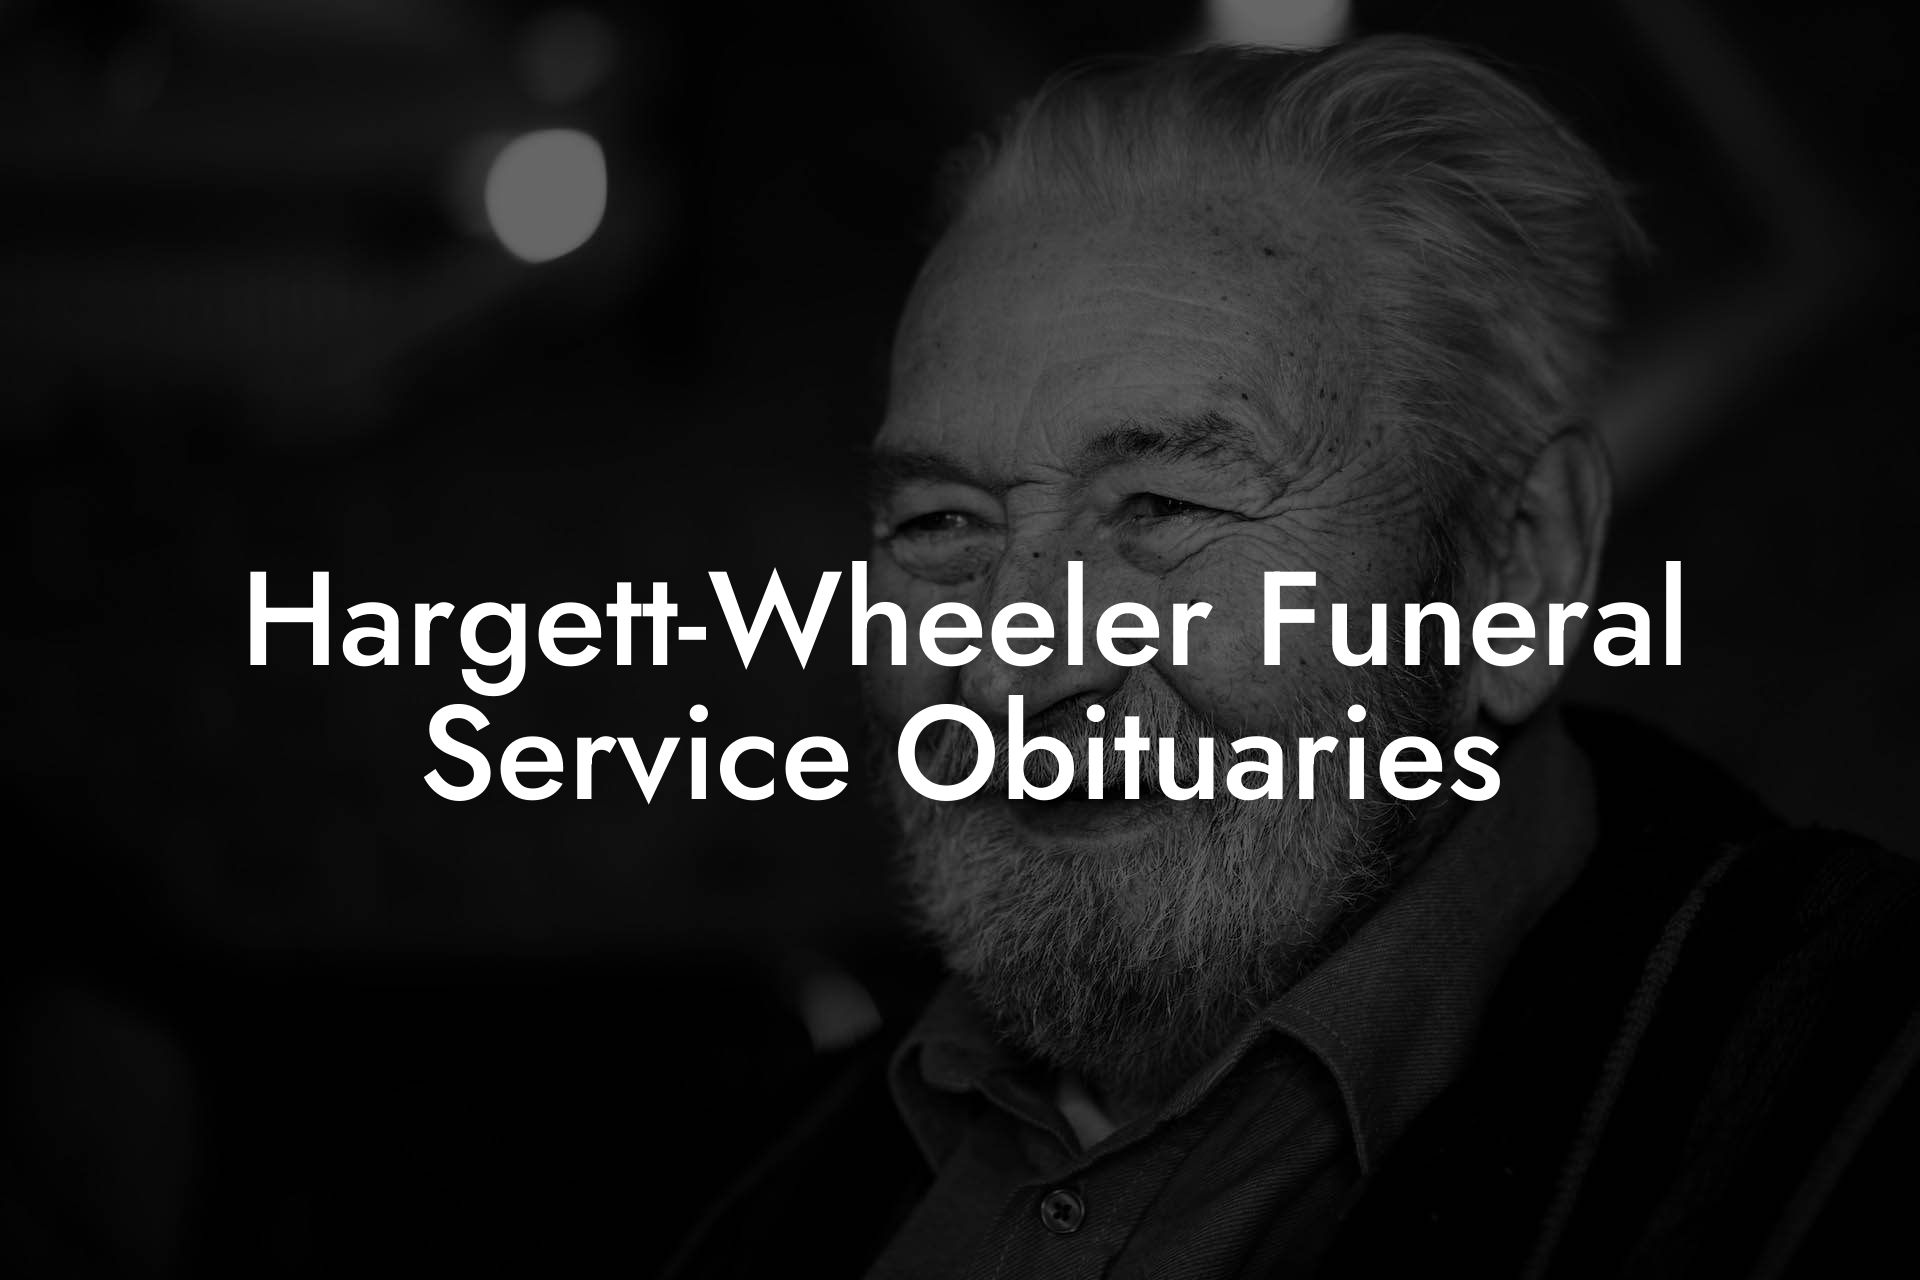 Hargett-Wheeler Funeral Service Obituaries